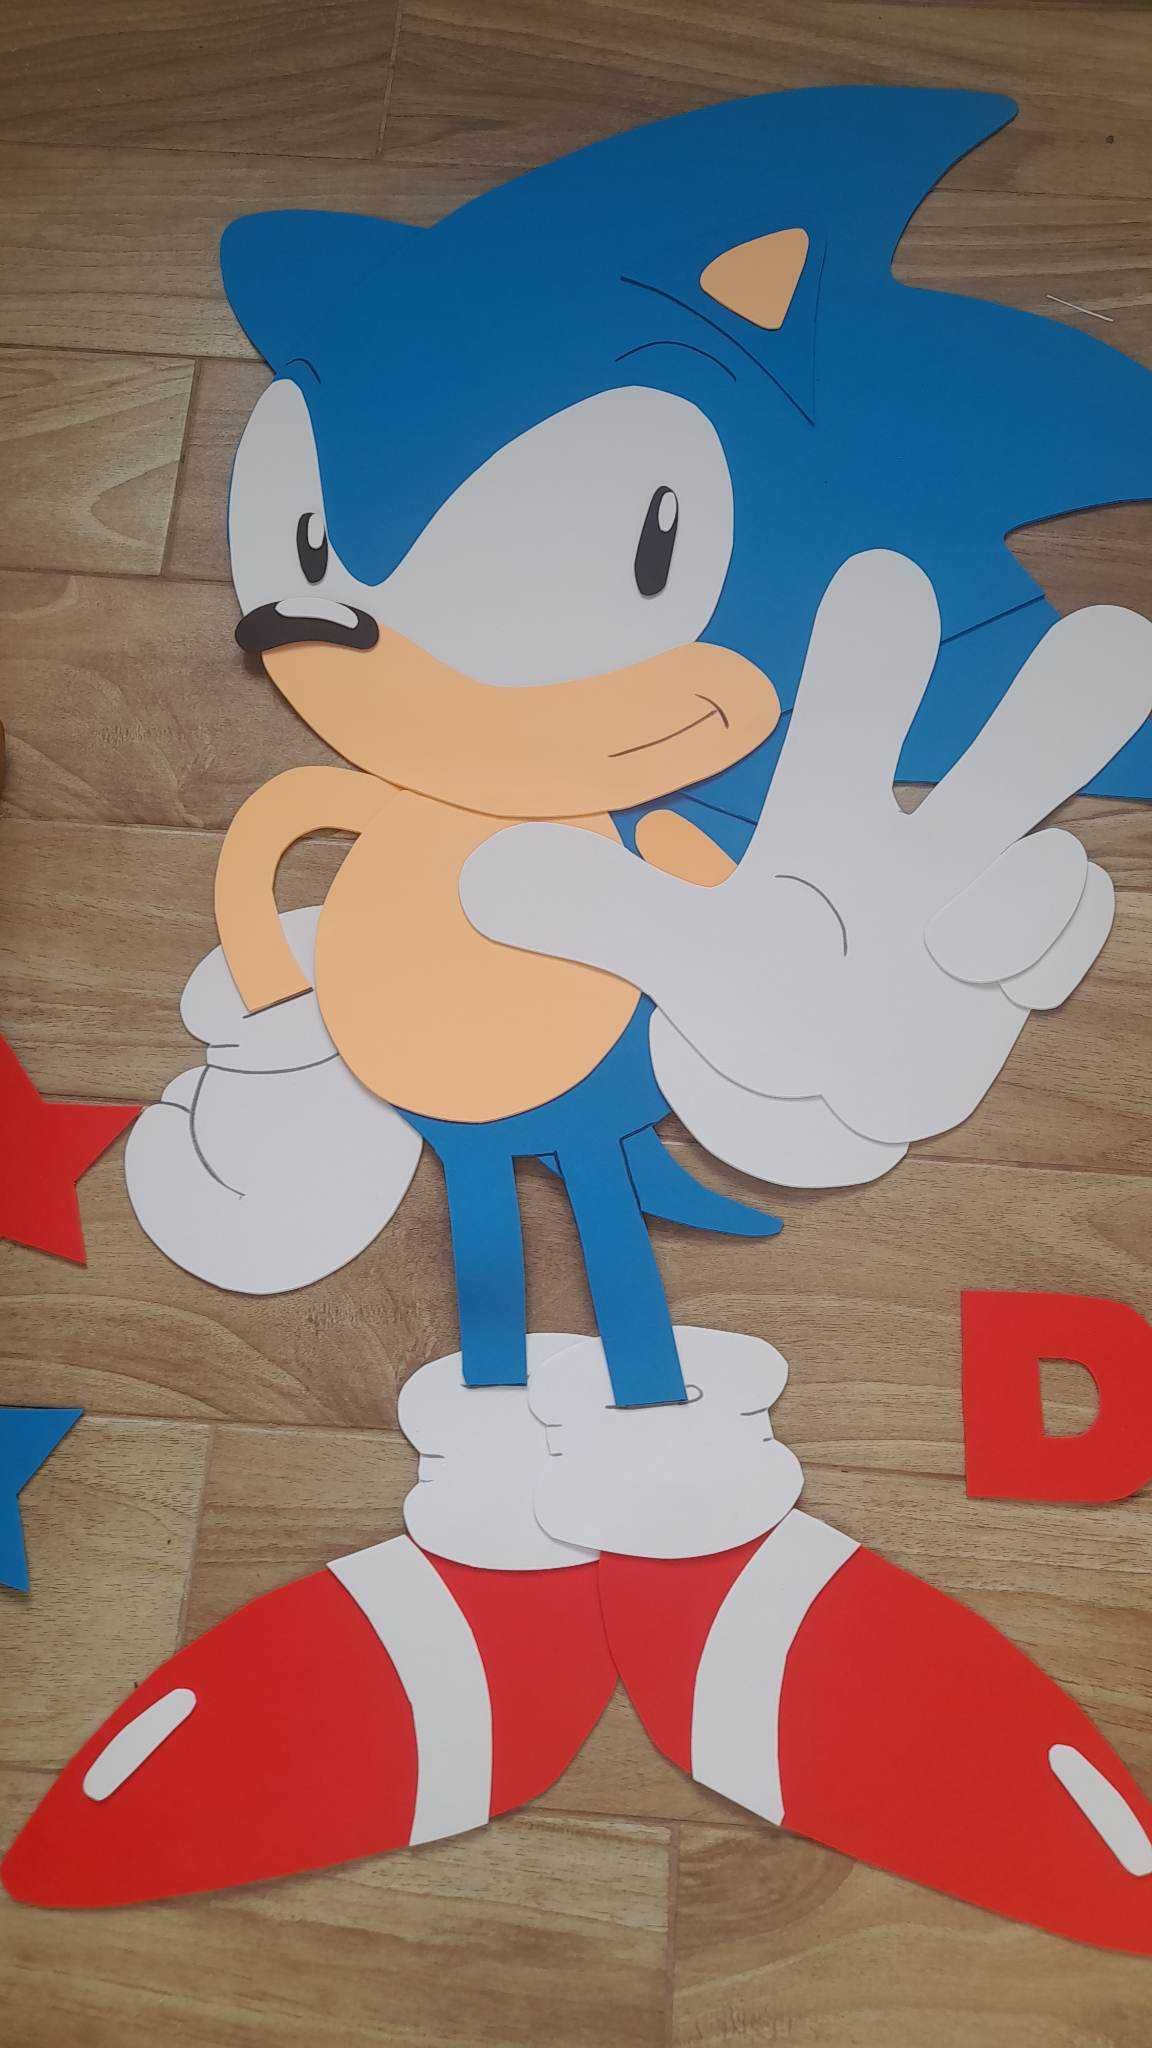 Sonic 1 metro painel eva adesivo festa